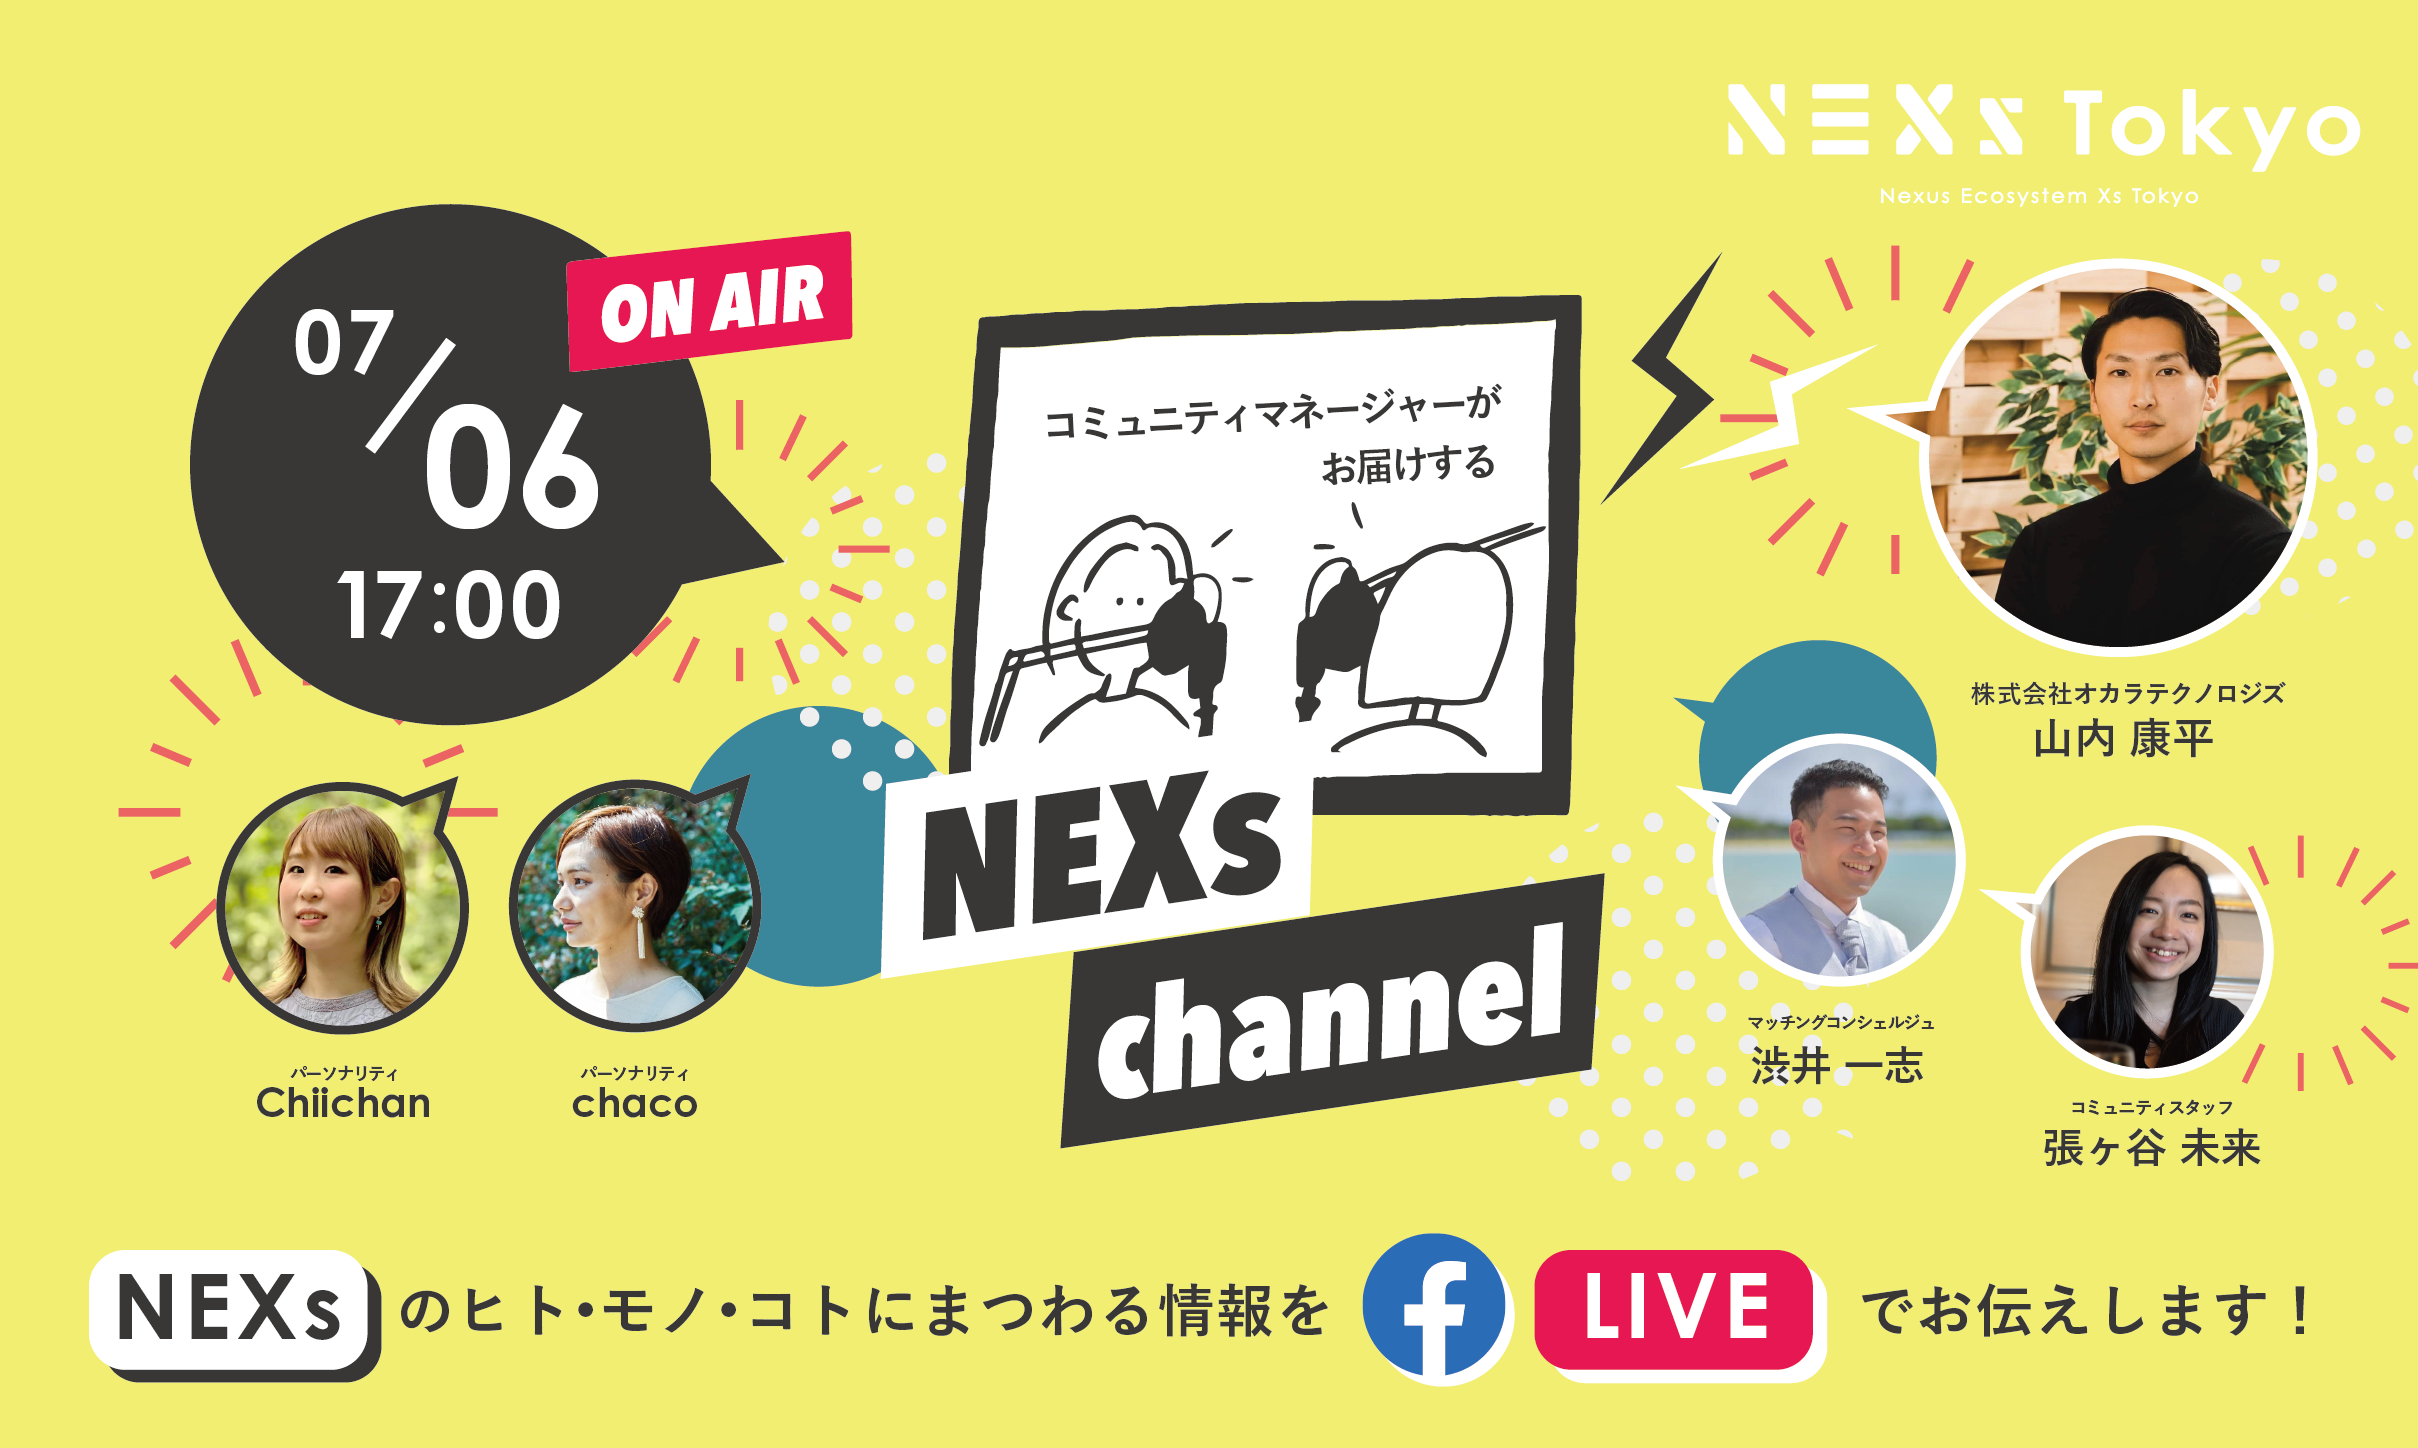 NEXs channel #29 -NEXs Tokyoのヒト・モノ・コトを特設ラジオブースから生放送でお届け！-